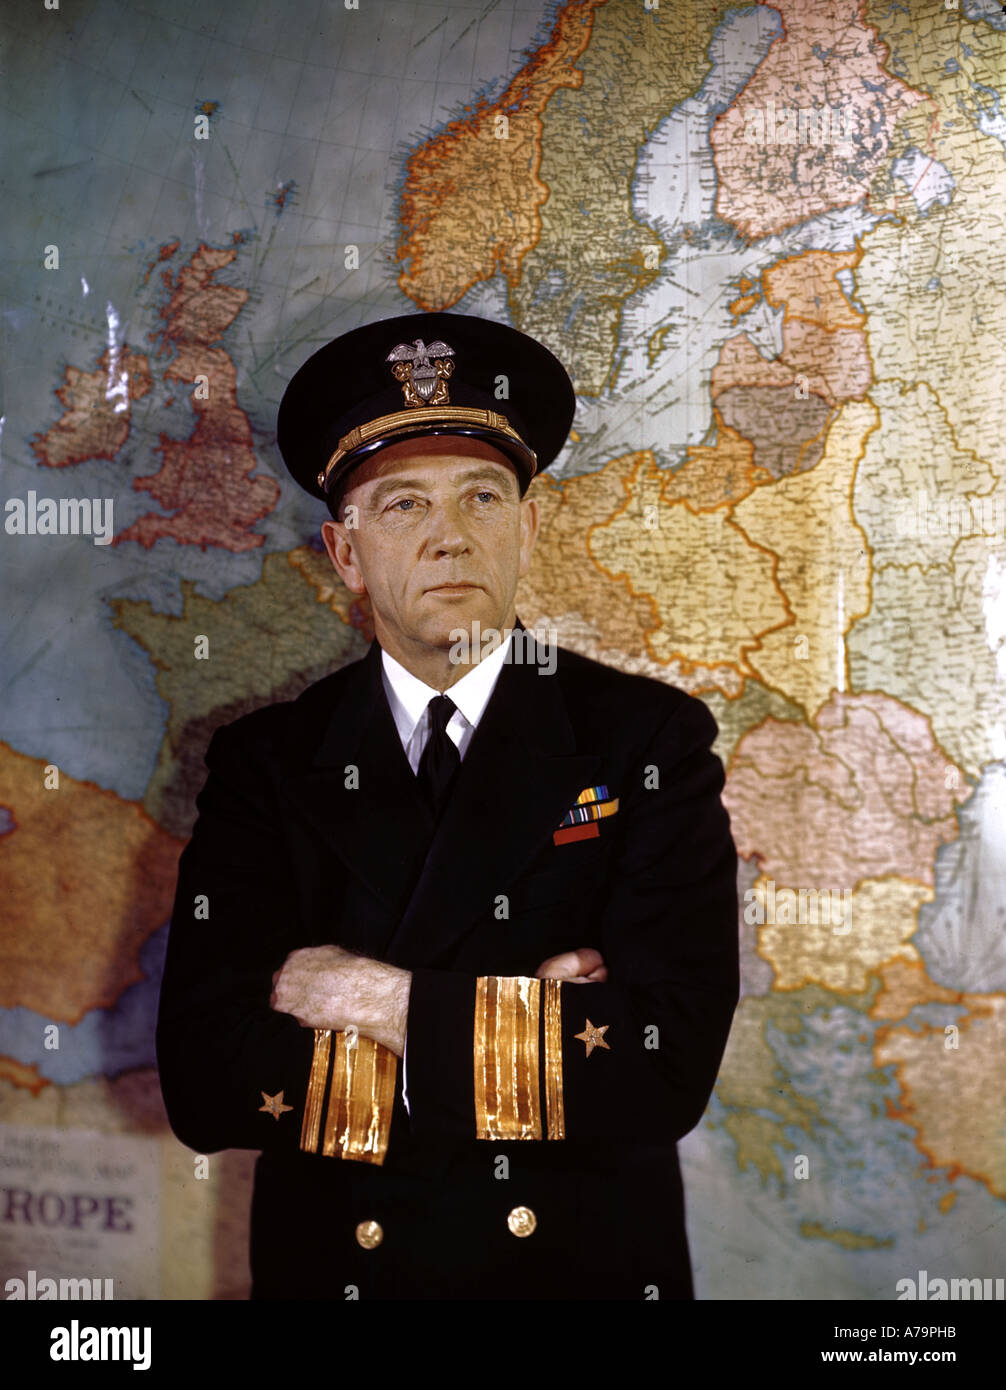 Almirante ALLEN G KIRK oficial naval estadounidense de 1888 a 1963 aquí como Comandante Naval estadounidense Senior para el desembarco en Normandía en 1944 Foto de stock